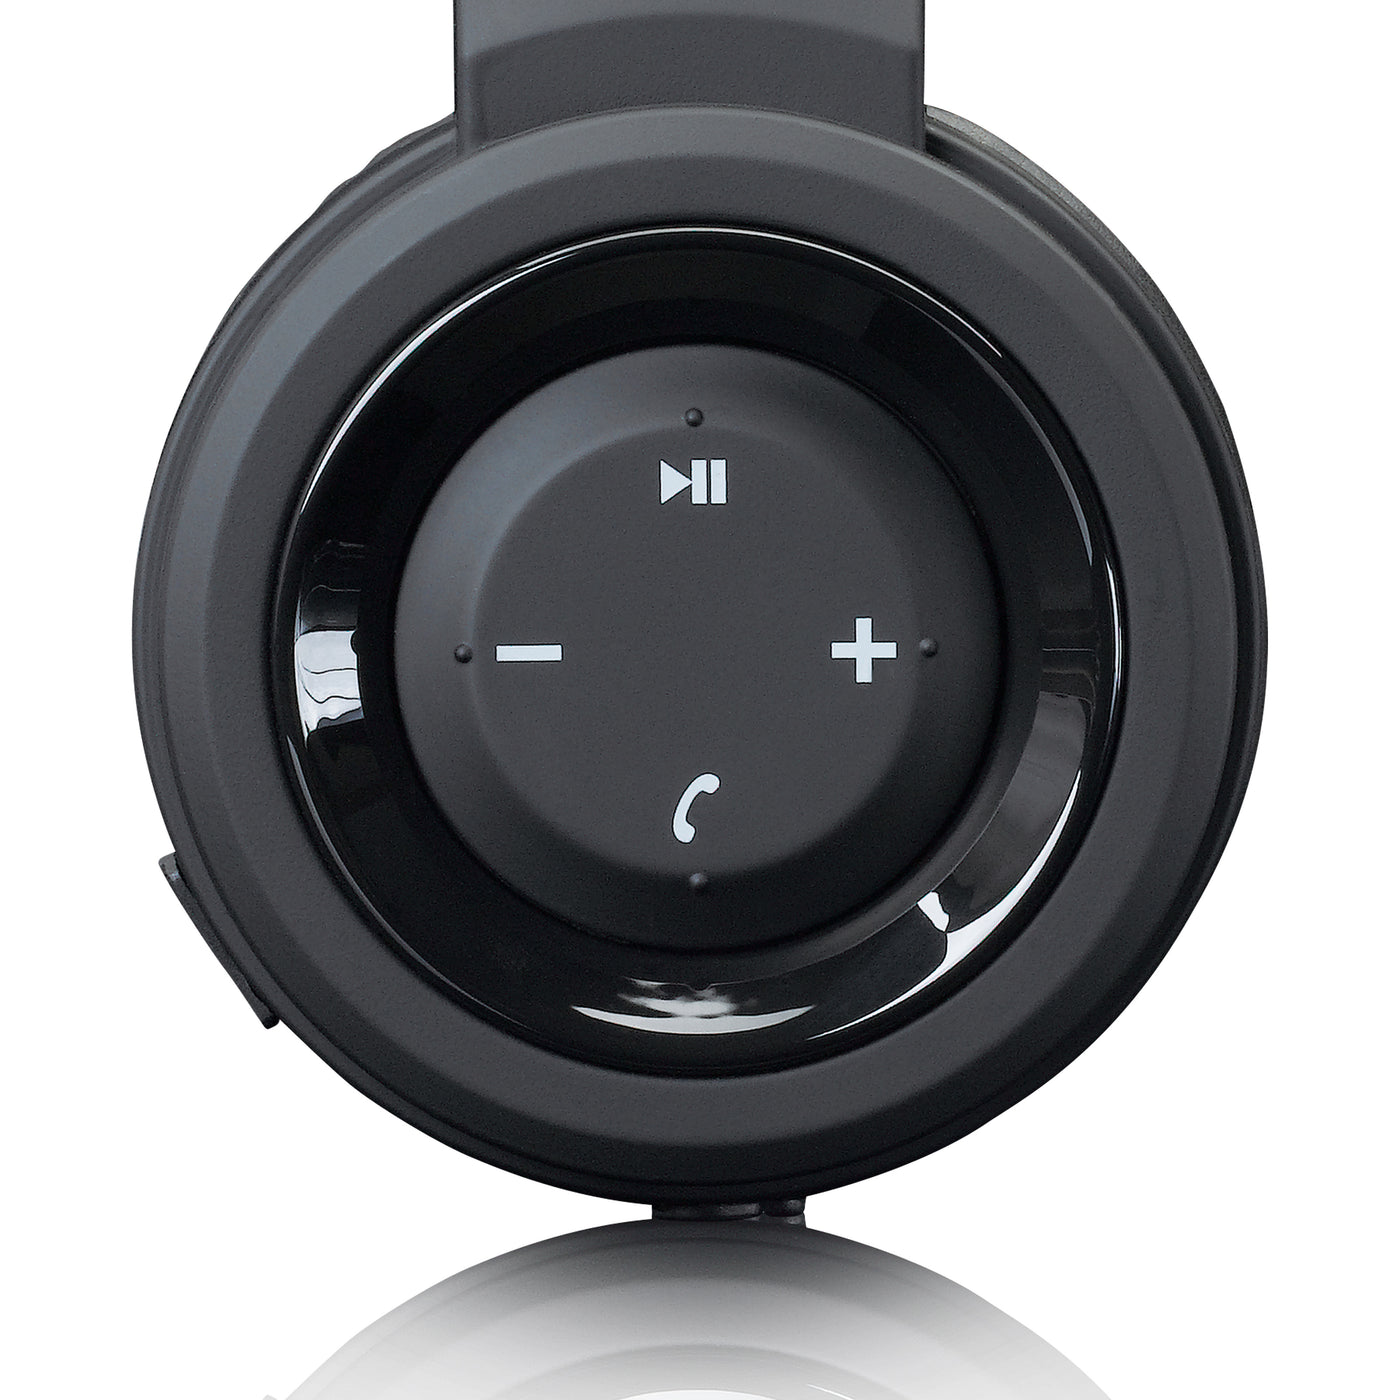 LENCO HPB-330BK - Headphones - Splashproof - Bluetooth® - Black